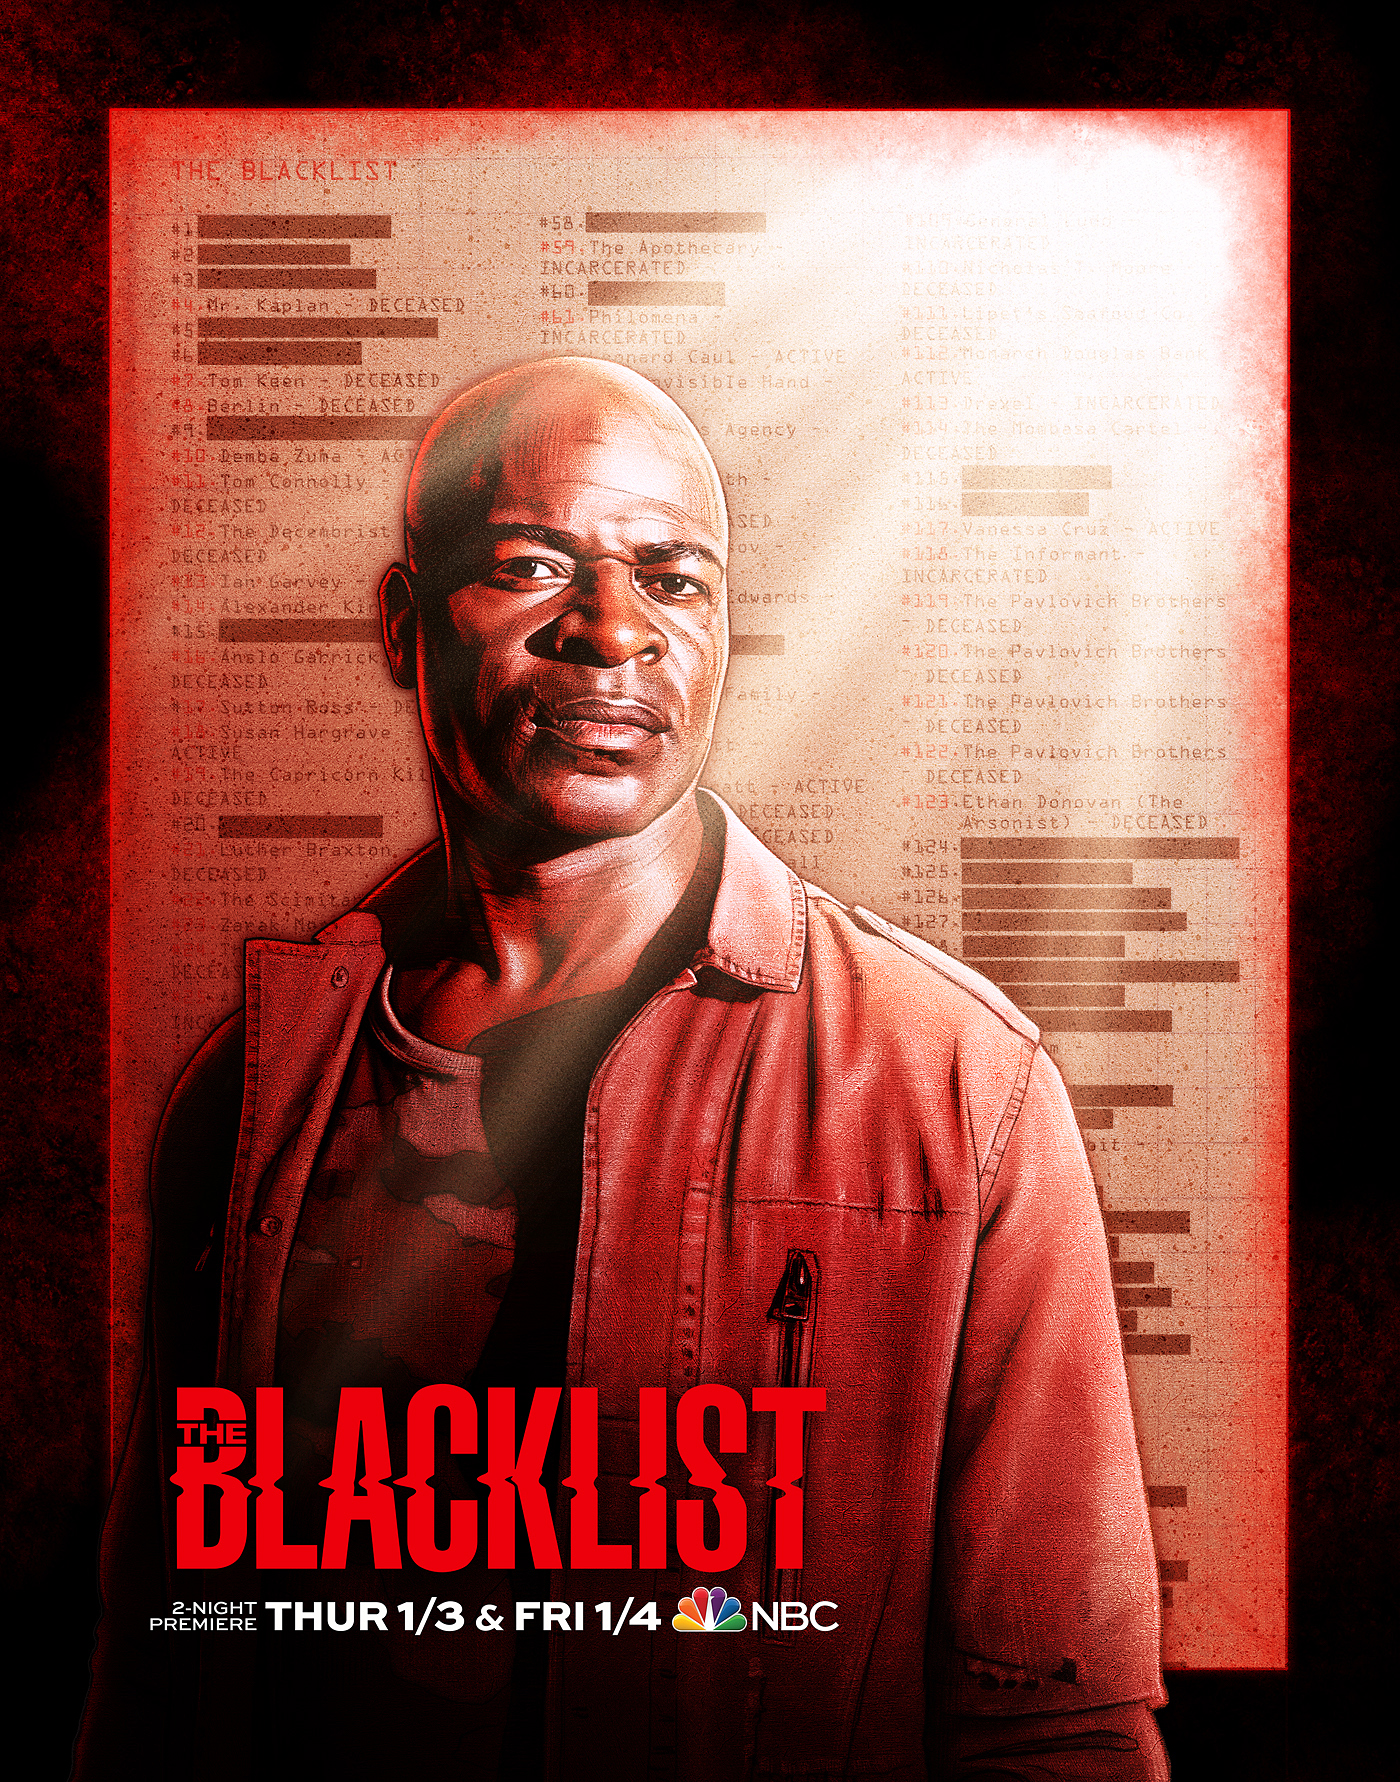 The Blacklist Season 6 Poster - Dembe Zuma by Kyle Lambert